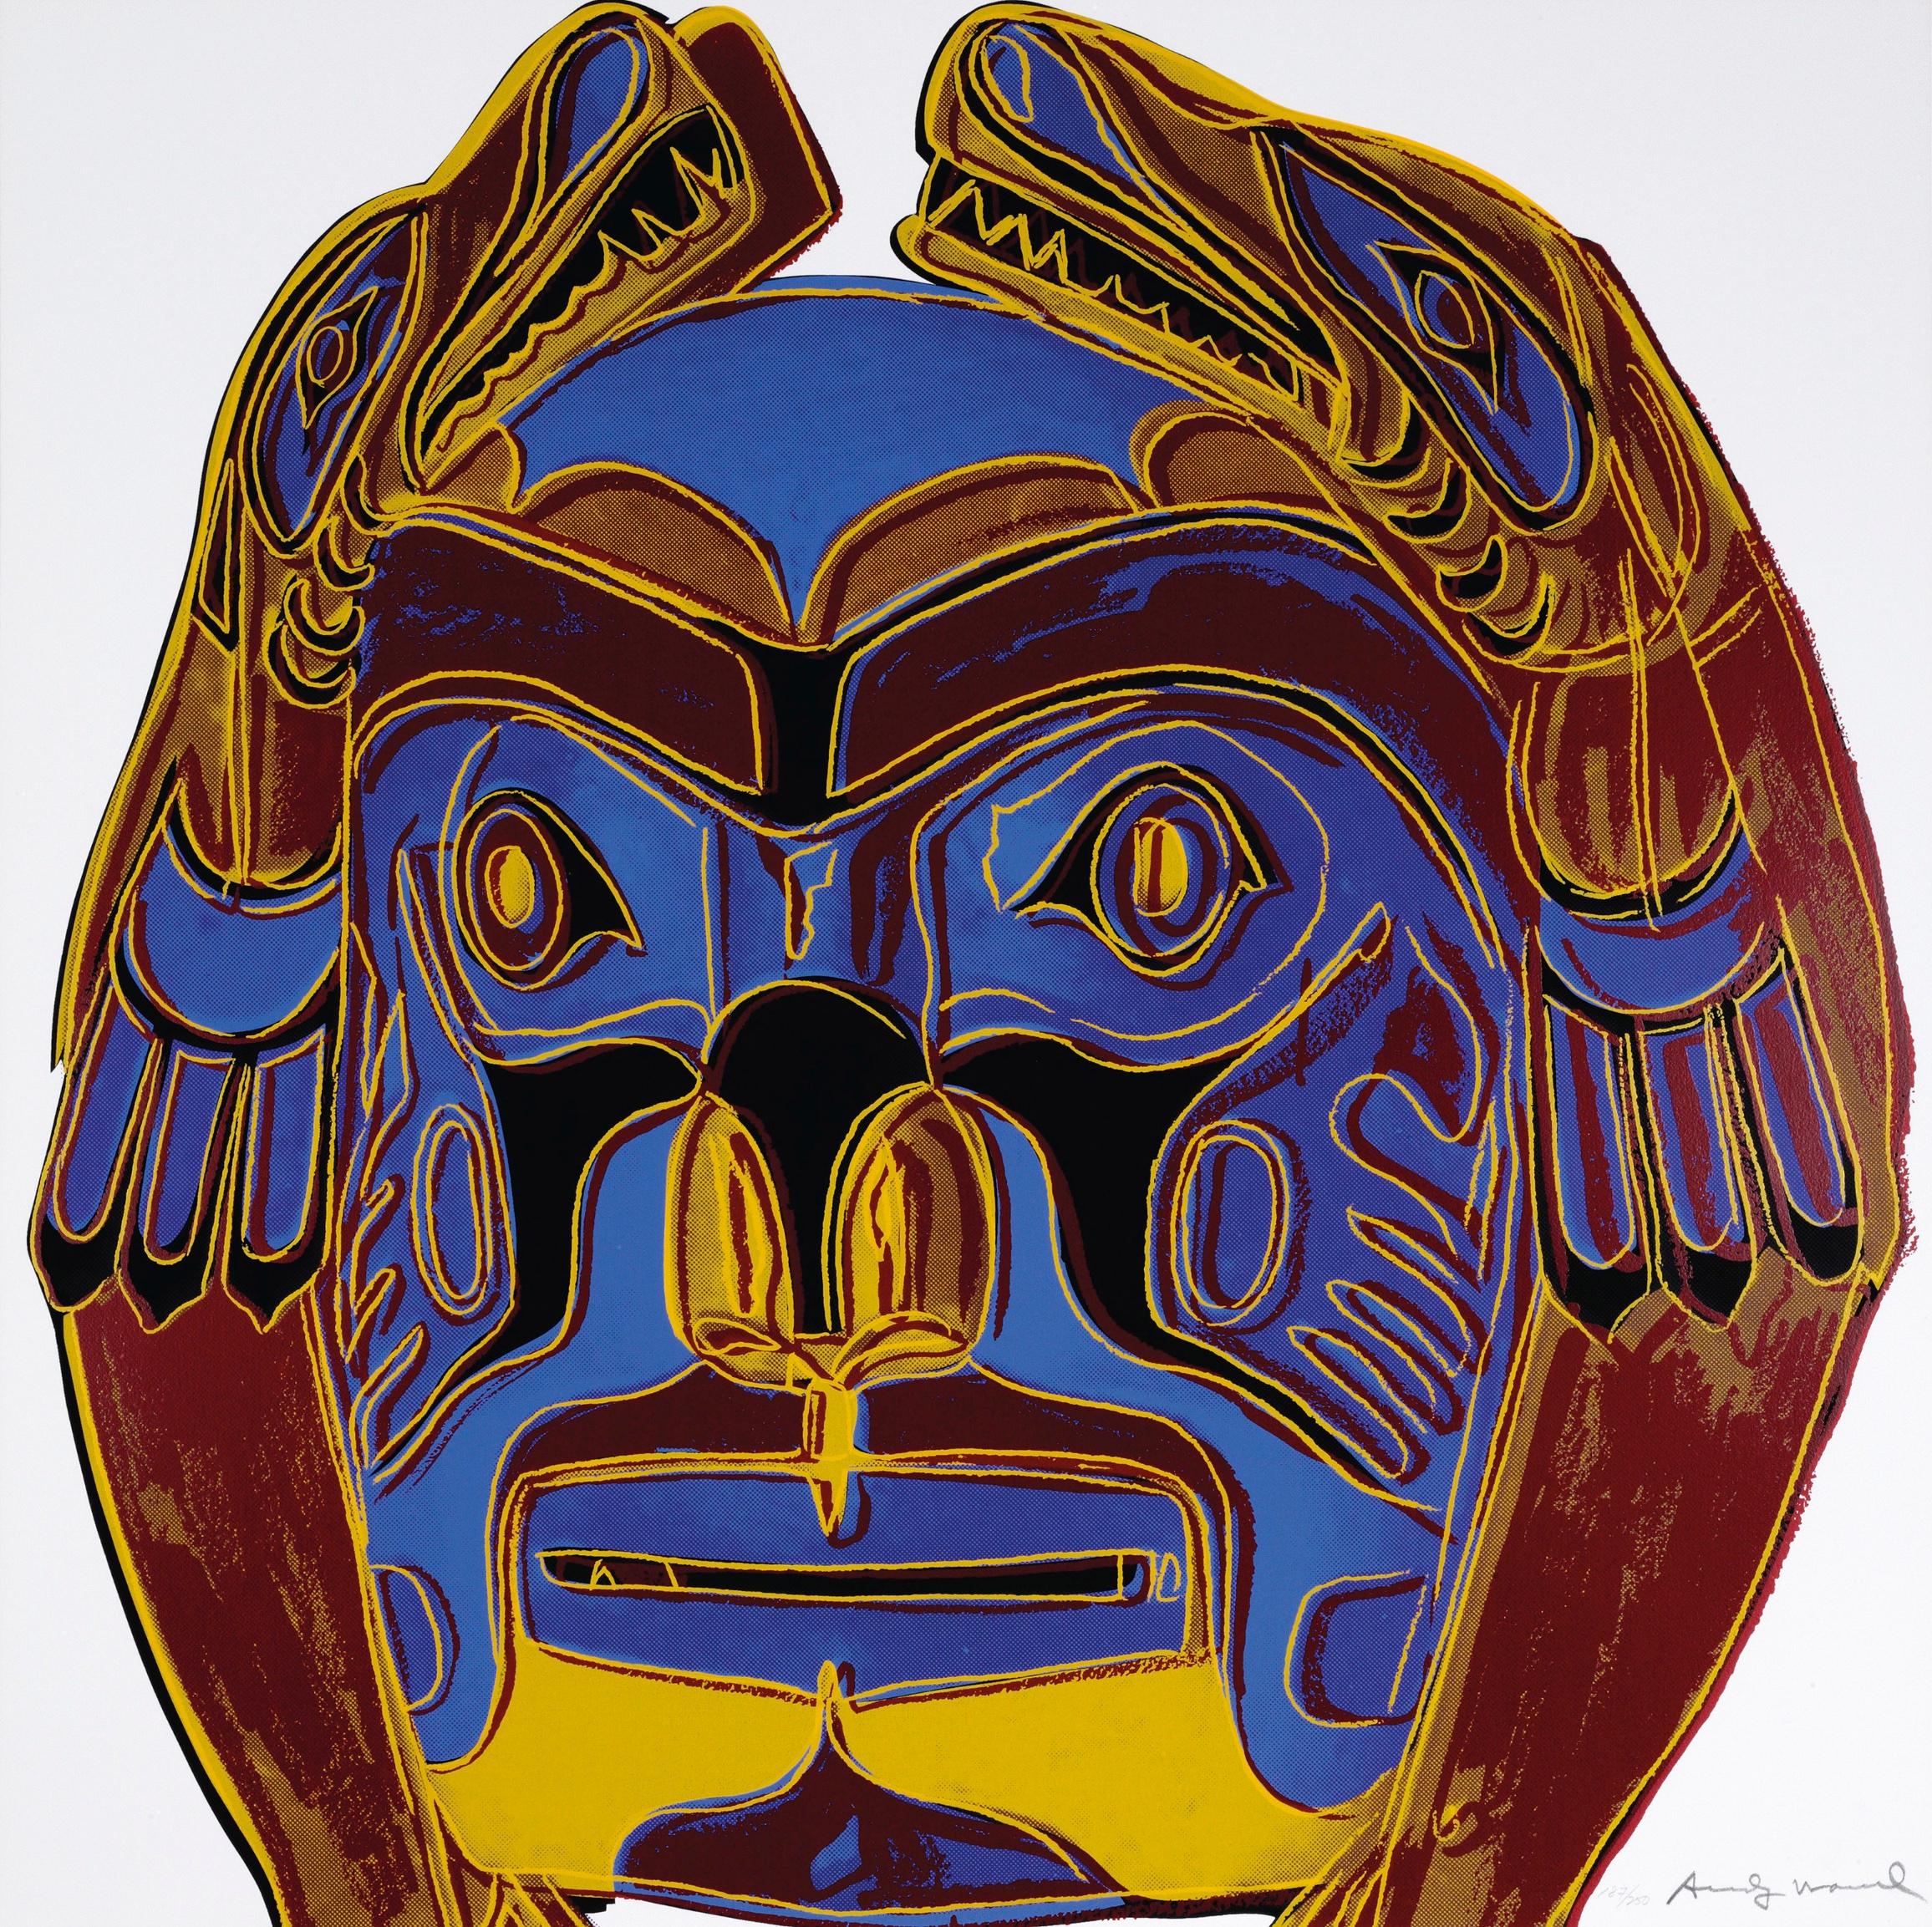 Artist: Andy Warhol
Medium: Original screenprint on Lenox Museum Board
Title: Northwest Coast Mask
Portfolio: Cowboys and Indians
Year: 1986
Edition: HC 7/15
Signed: Hand signed in pencil
Sheet Size: 36" x 36"
Reference: Feldman II.380